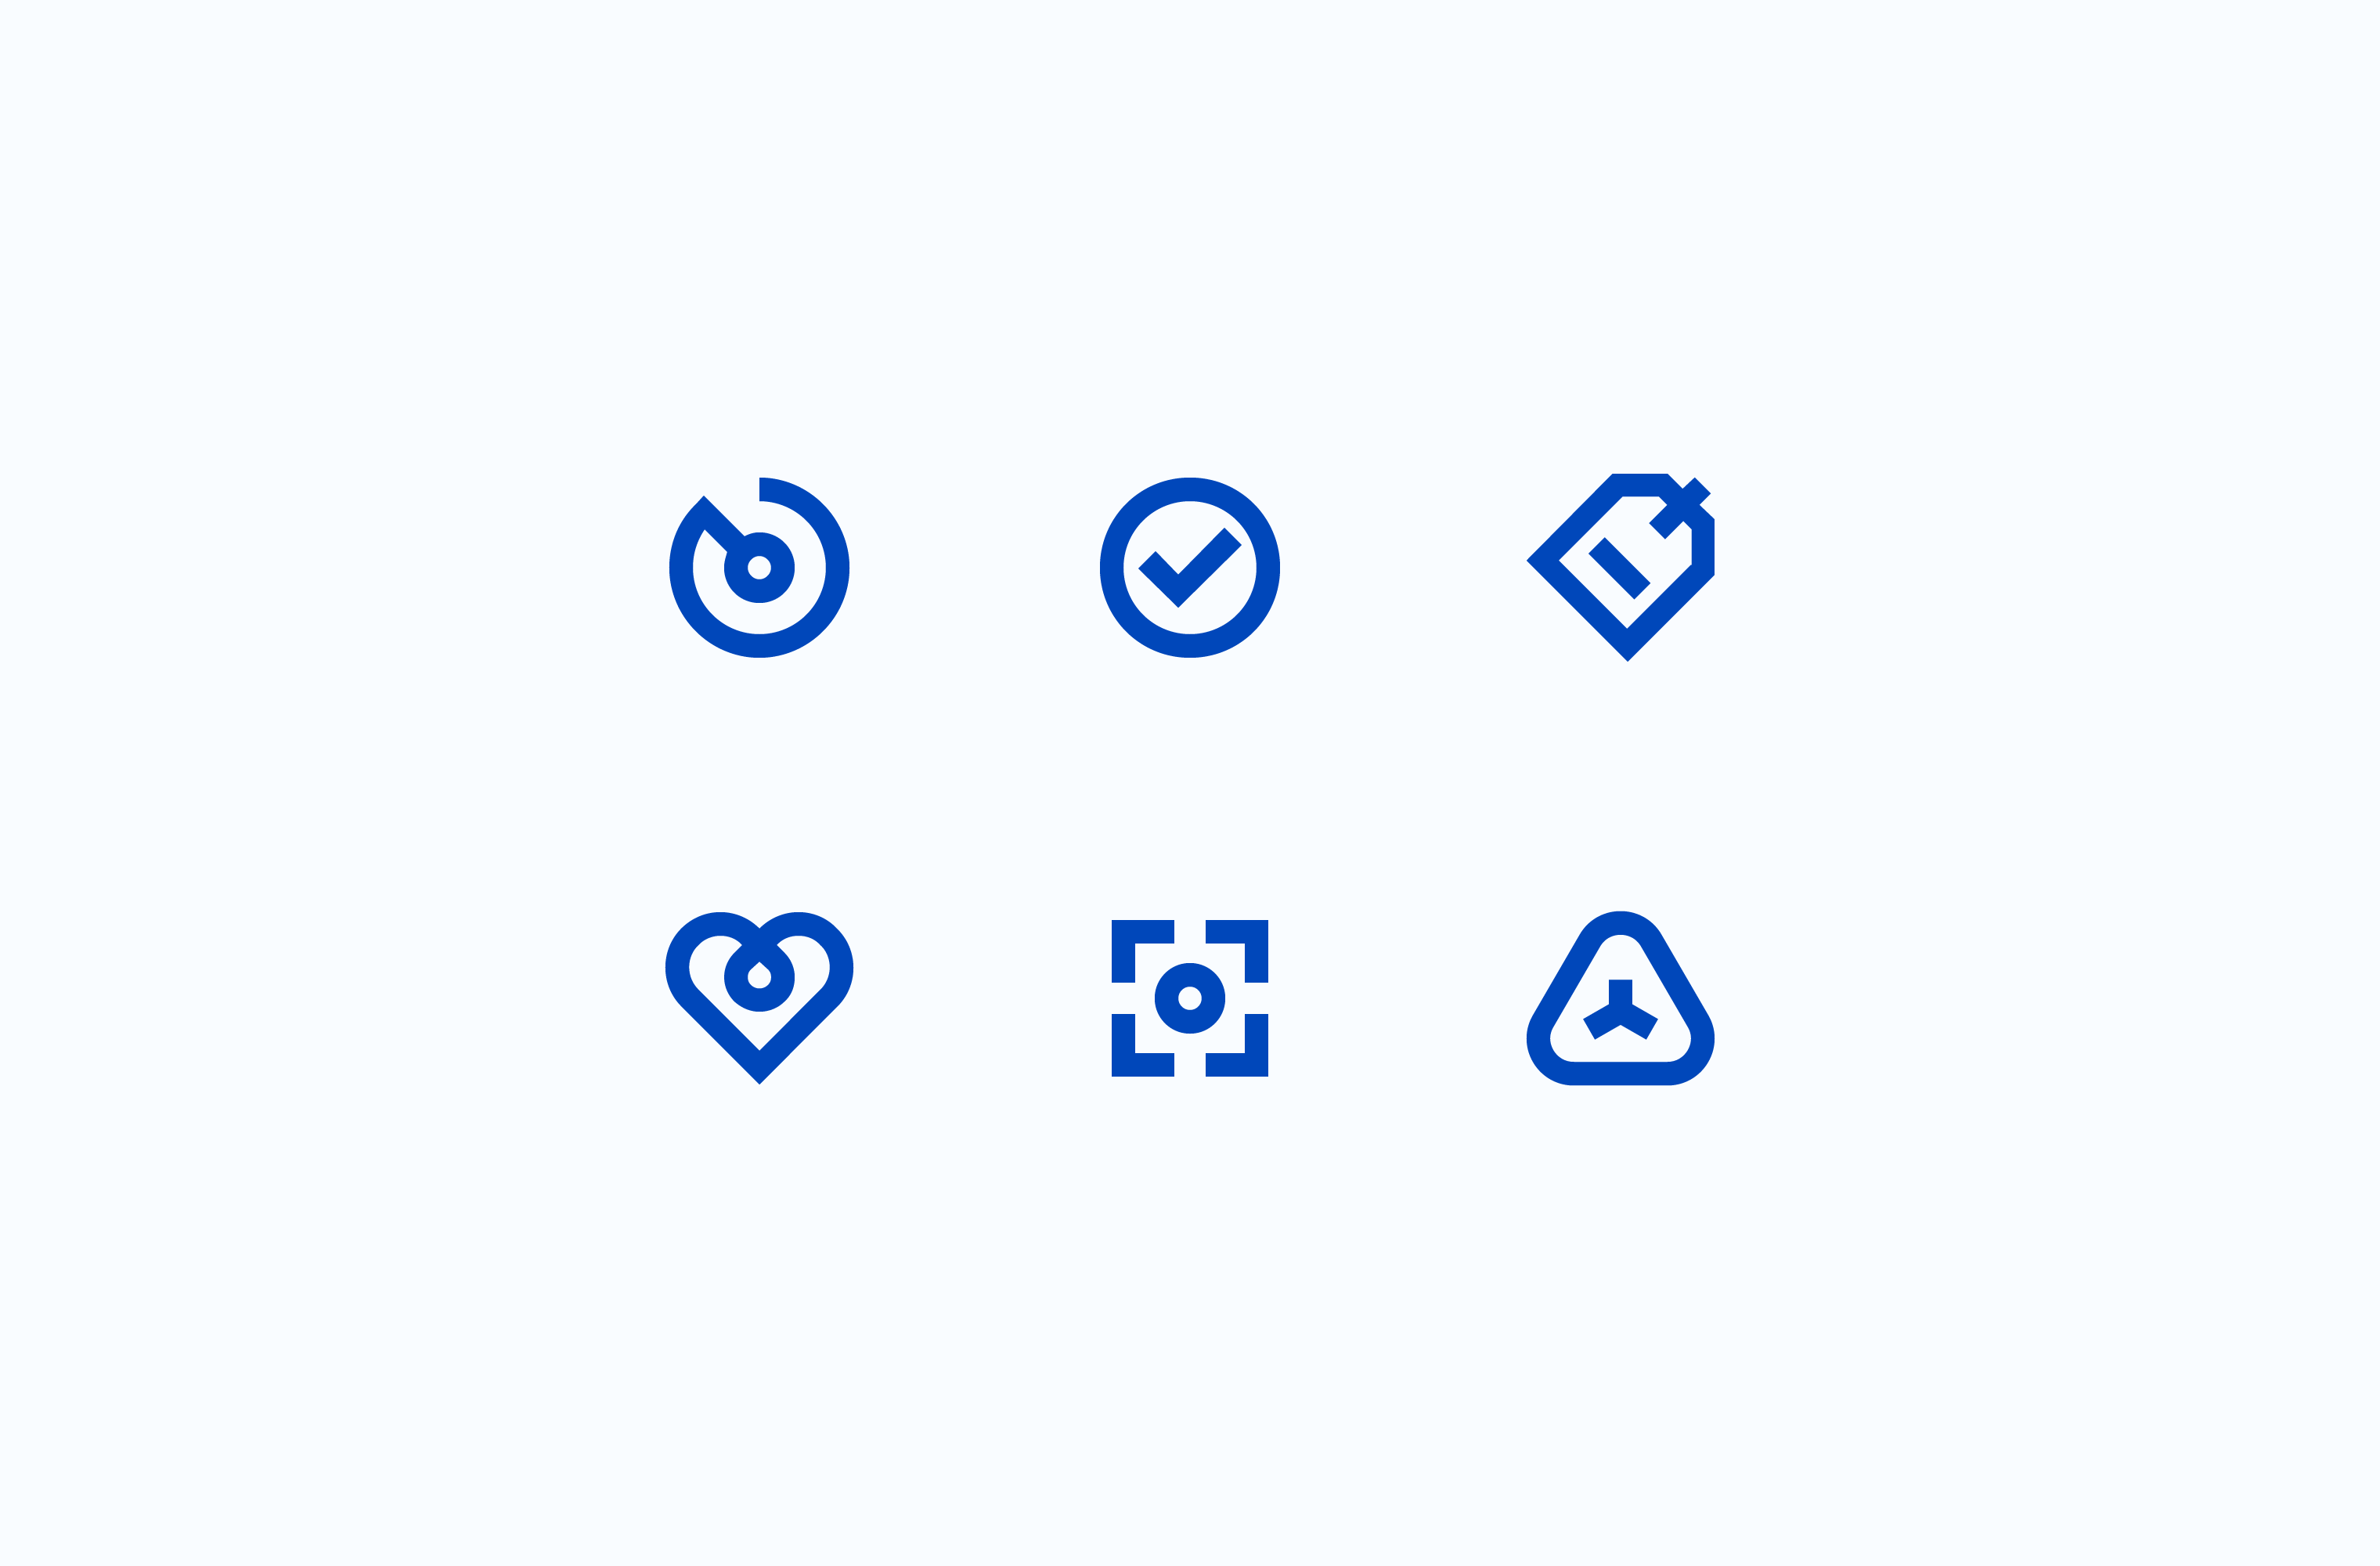 Blue Bolt icon set on a white background